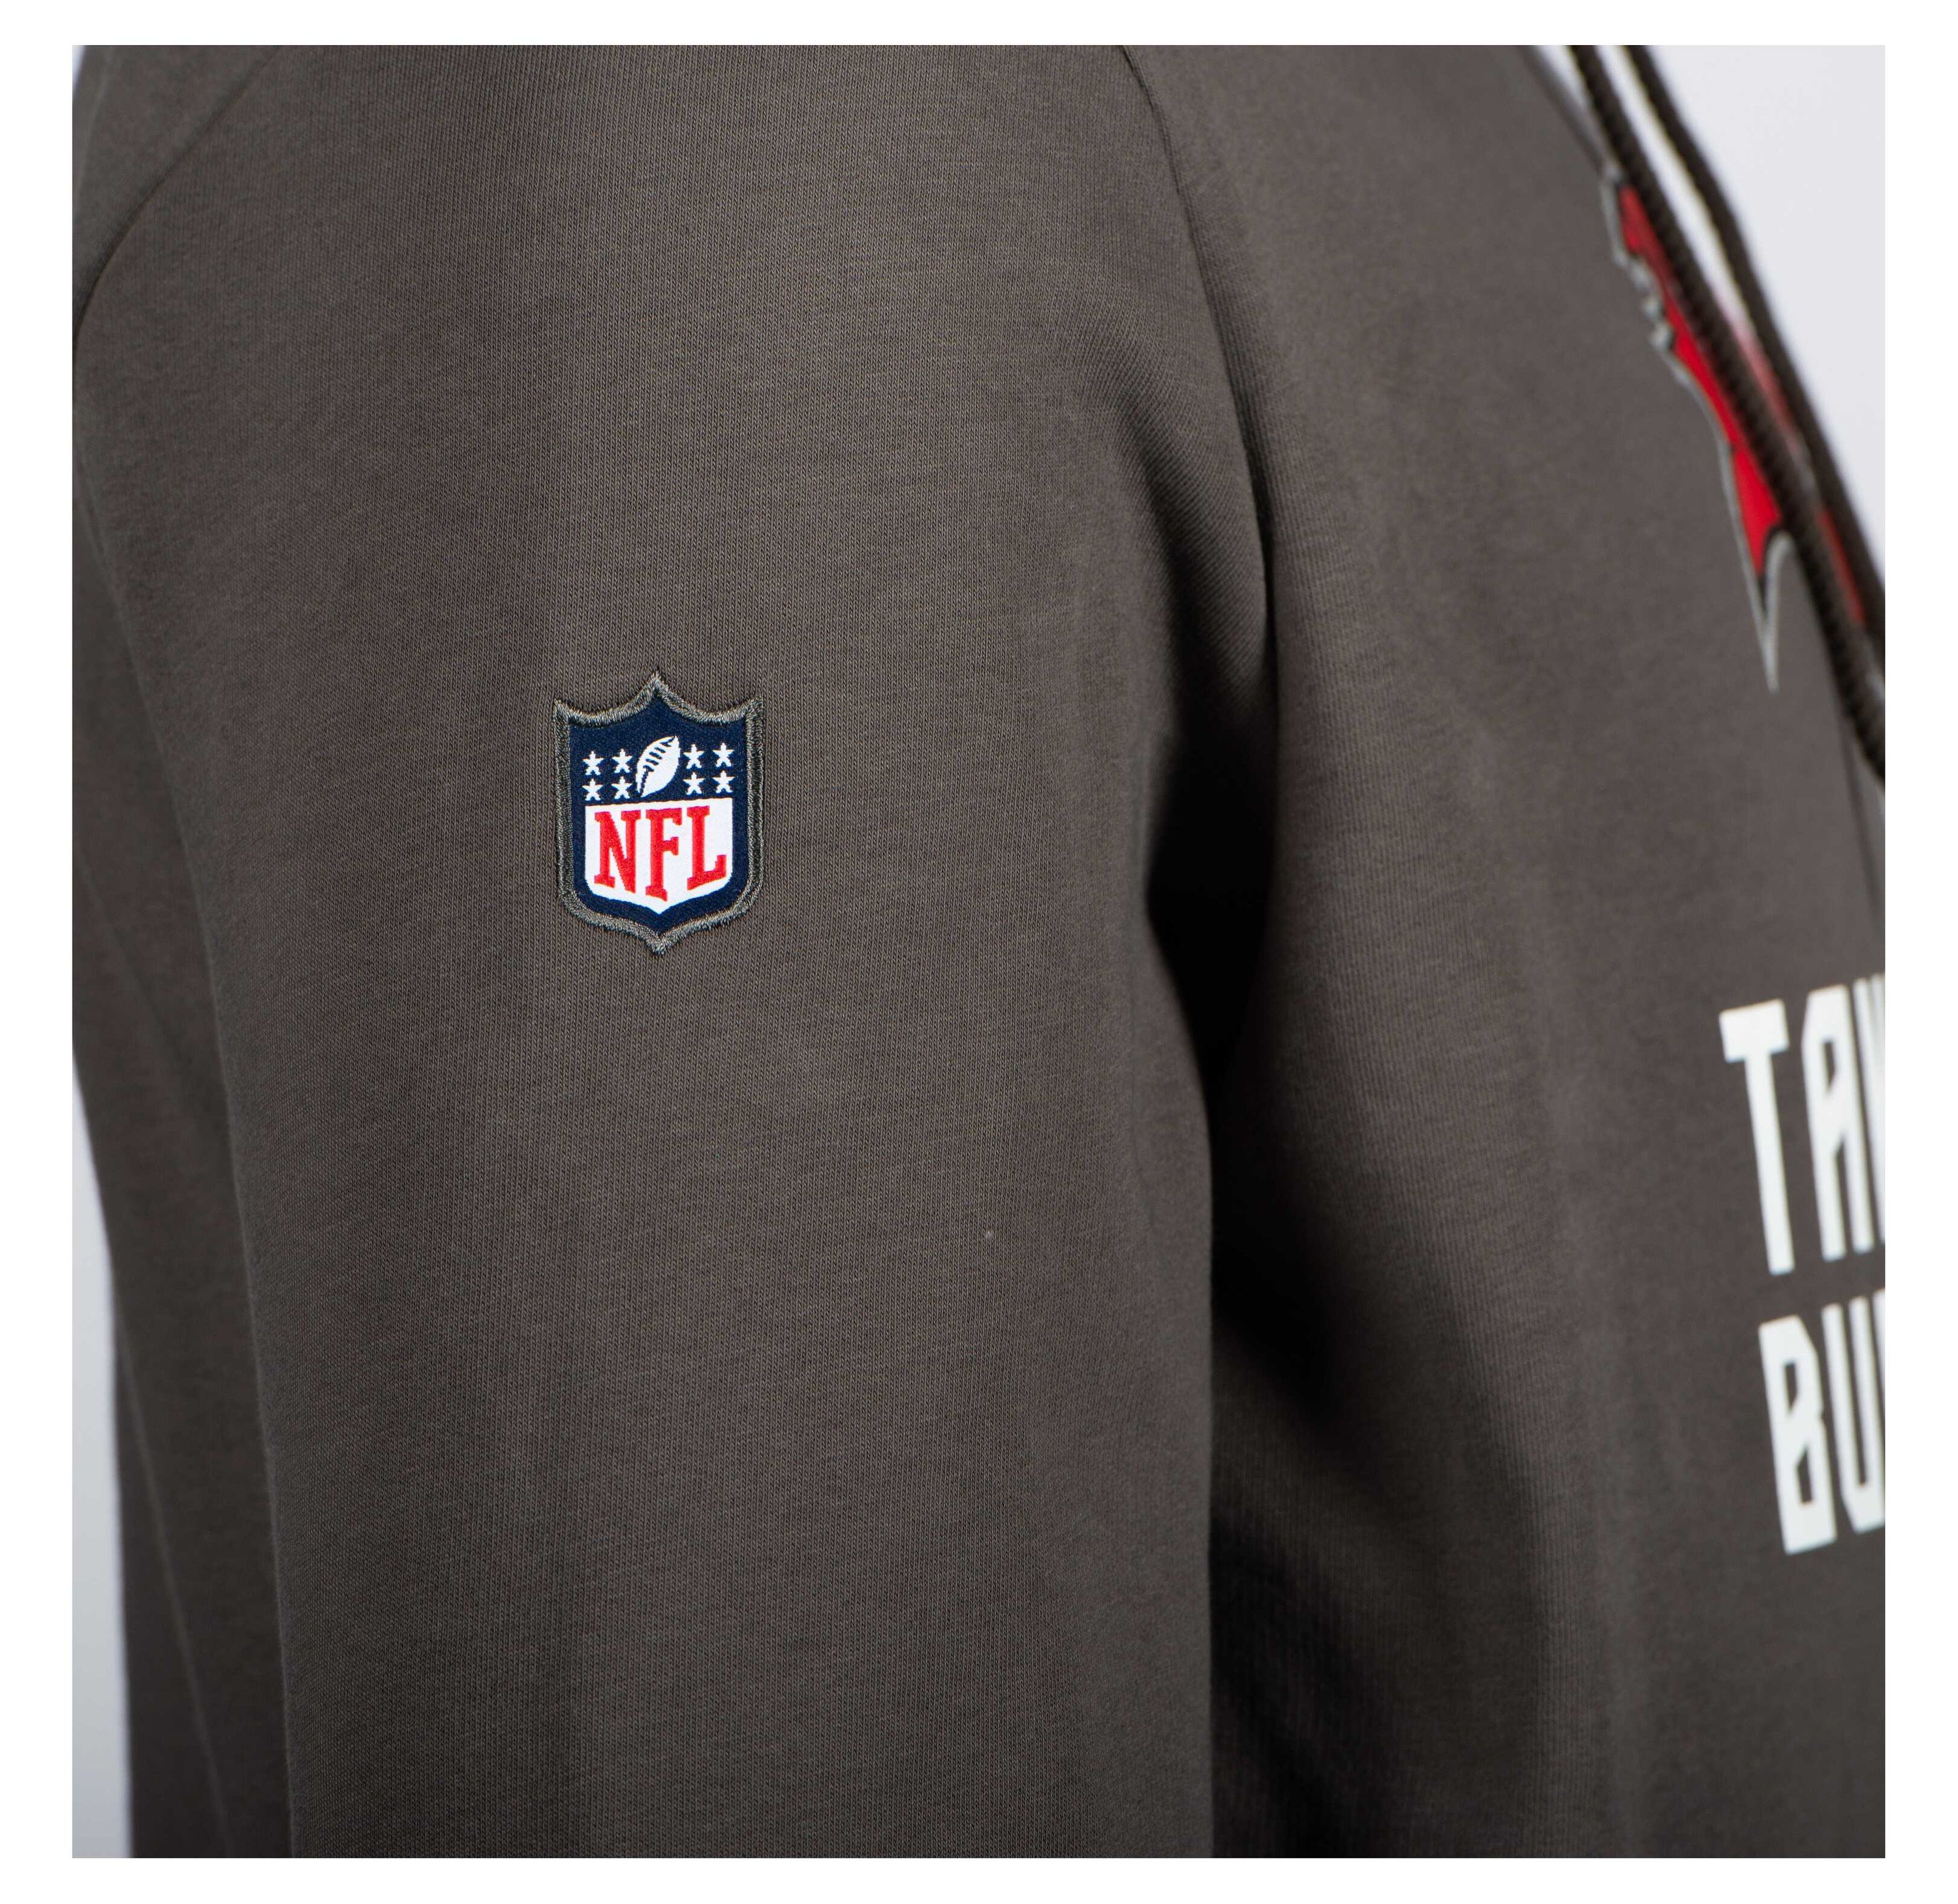 New Era - NFL Tampa Bay Buccaneers Team Logo and Name Hoodie